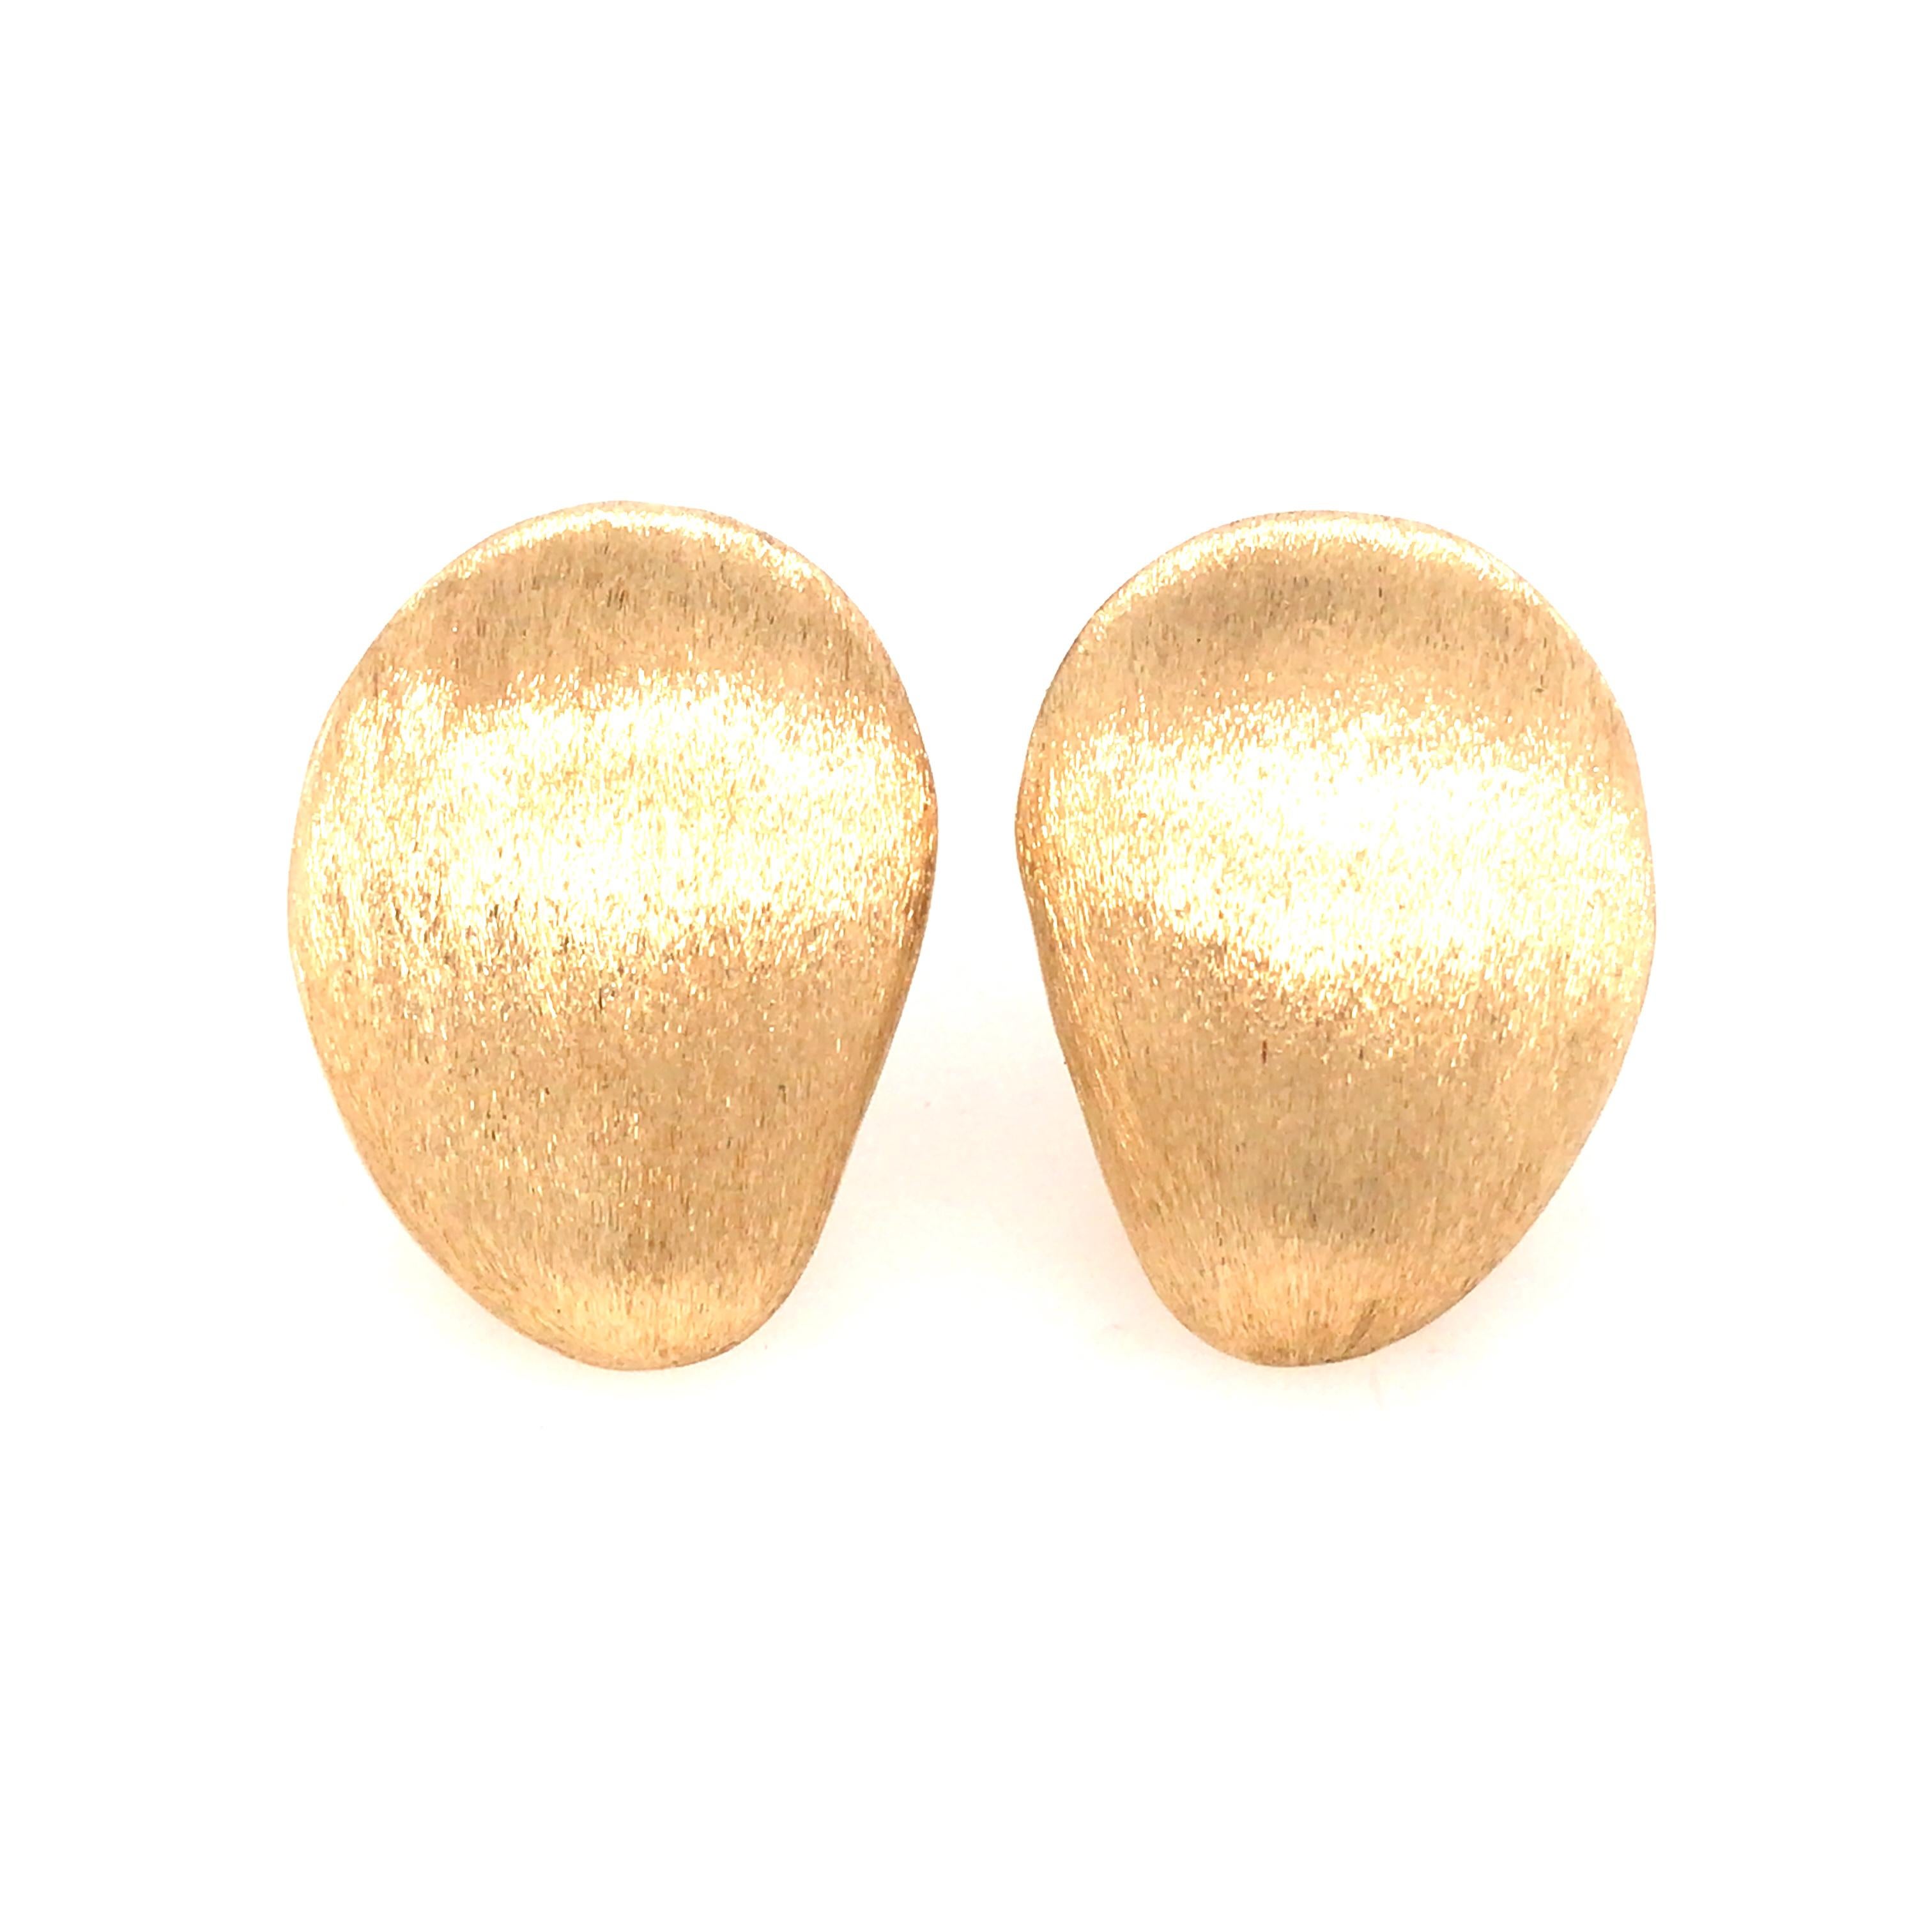 Satin Finish Jellybean Shape Earrings in 18K Yellow Gold.  The Earrings measure 1 inch in length and 3/4 inch in width.  18.81 grams.